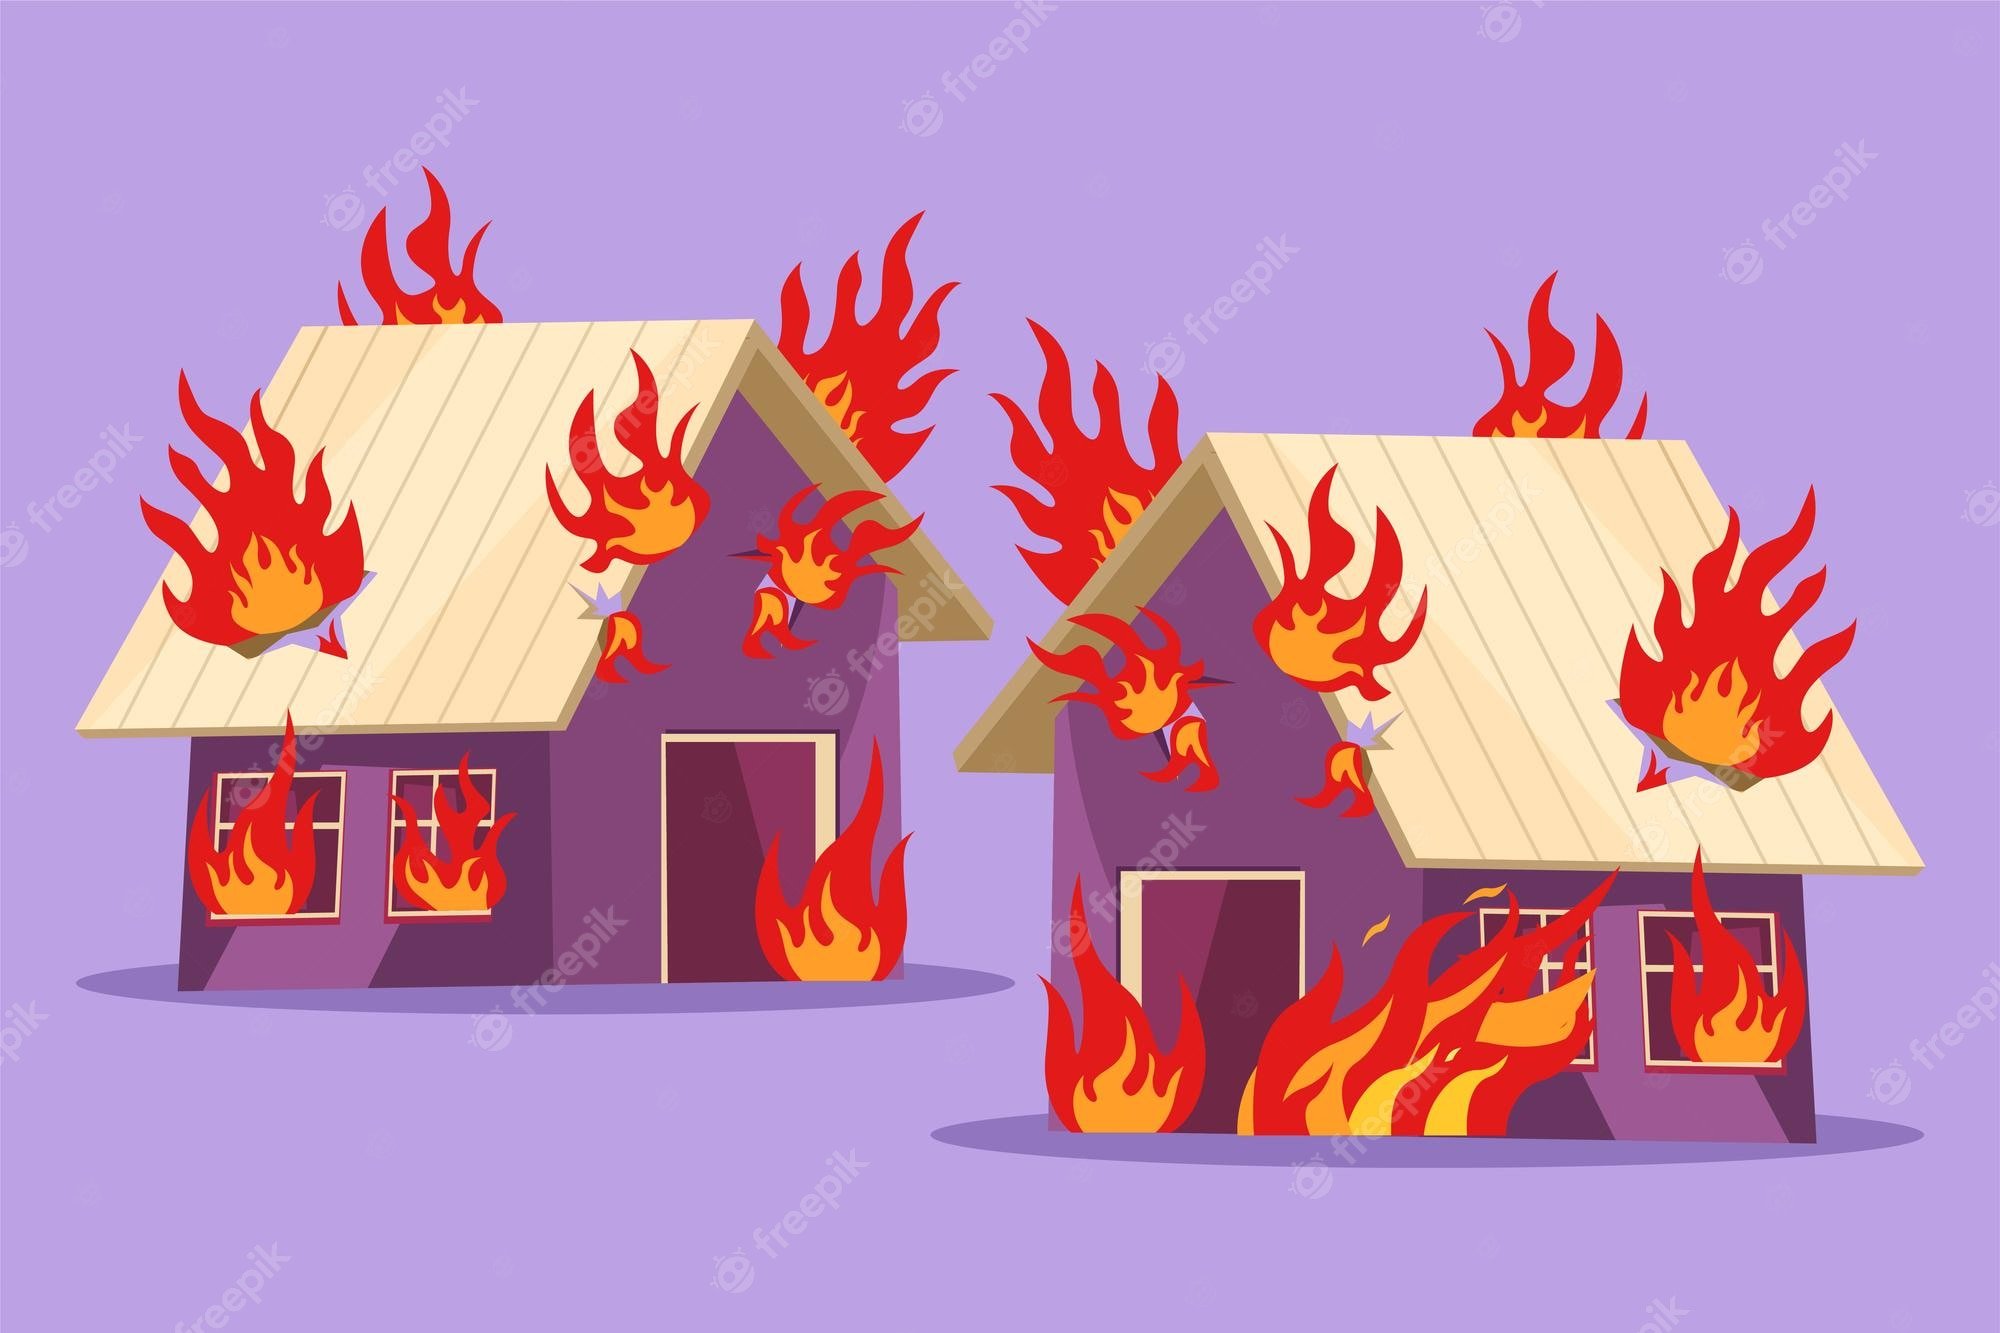 Casa en llamas o simbolismo